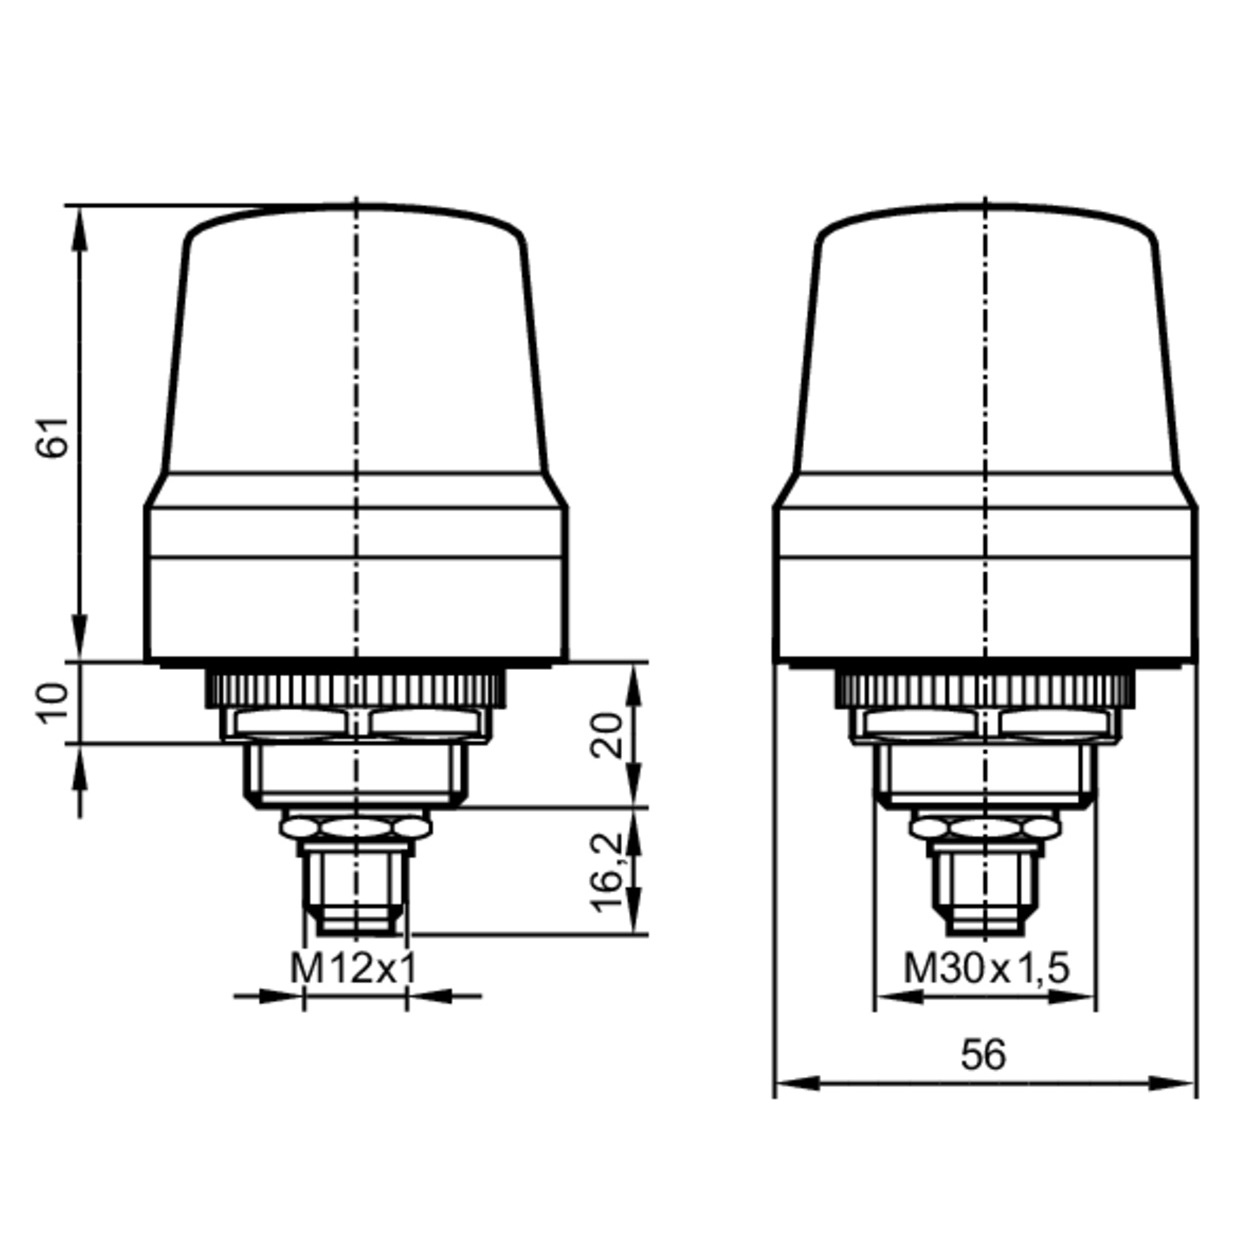 63342 dv2120 1segment signal lamp iolink or di control 2d dimensions